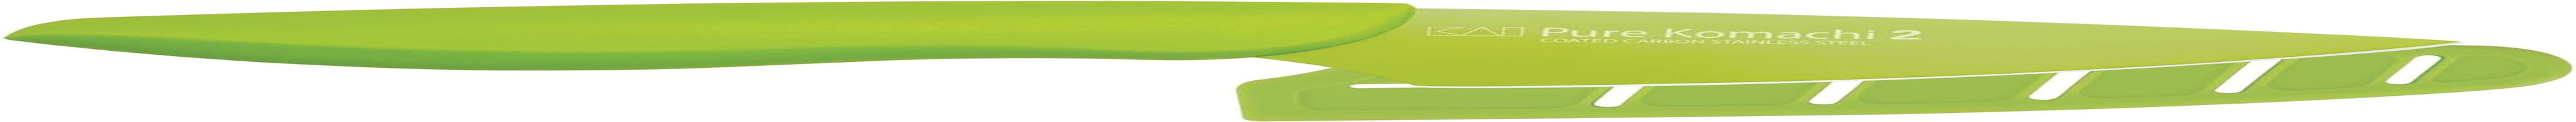 AB5068 Pure Komachi 2 3.5 Inch Green Paring Knife